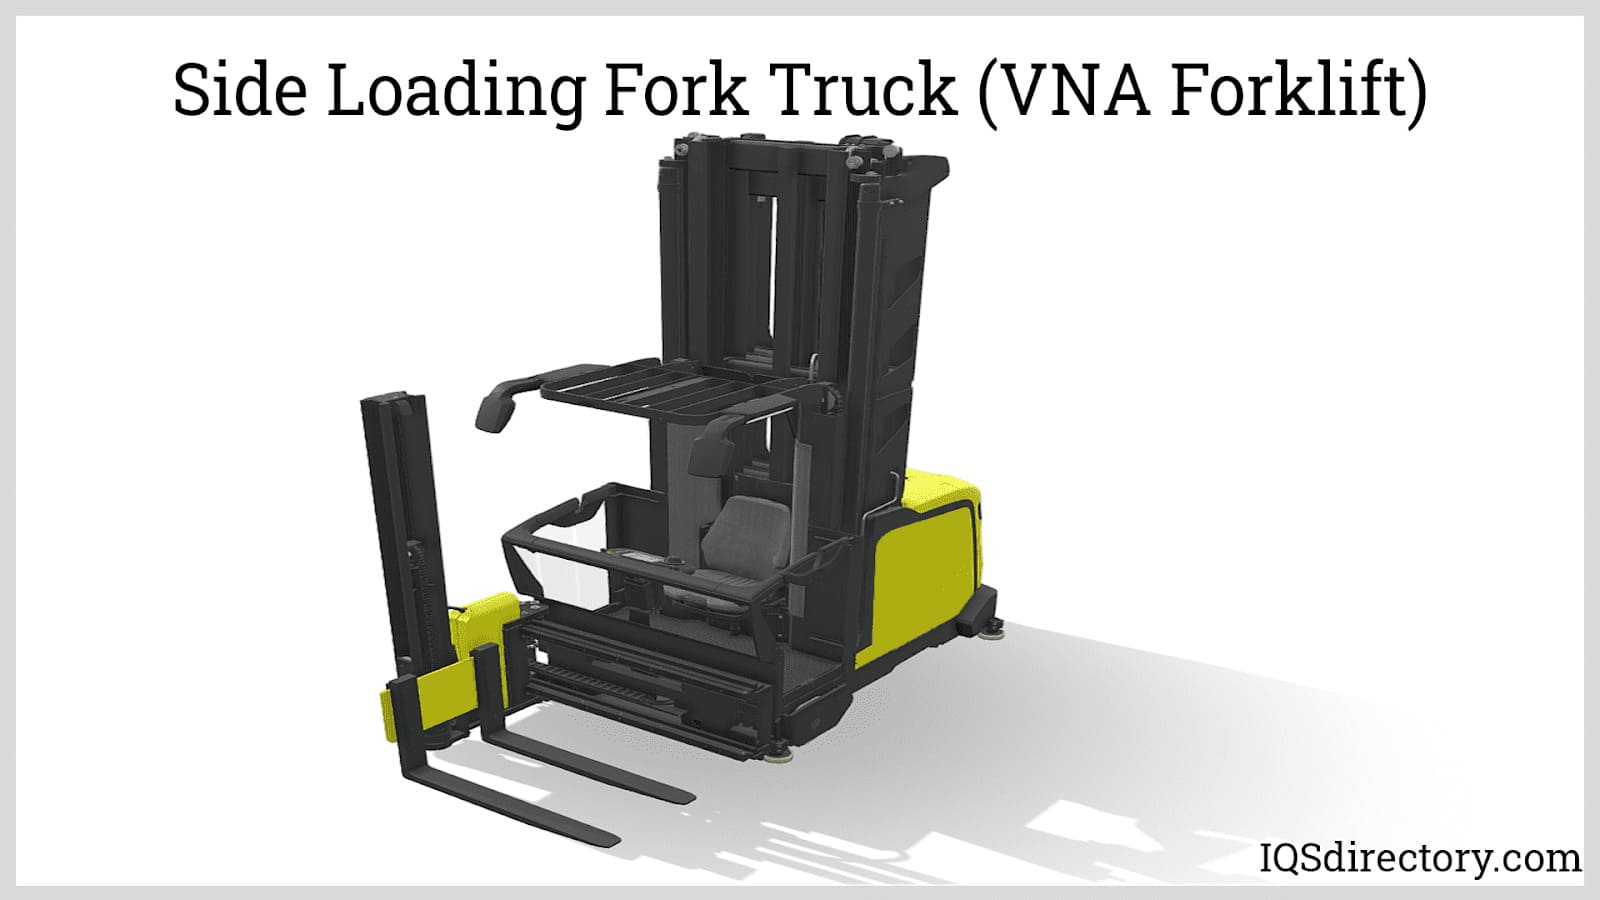 Side Loading Fork Truck (VNA Forklift)